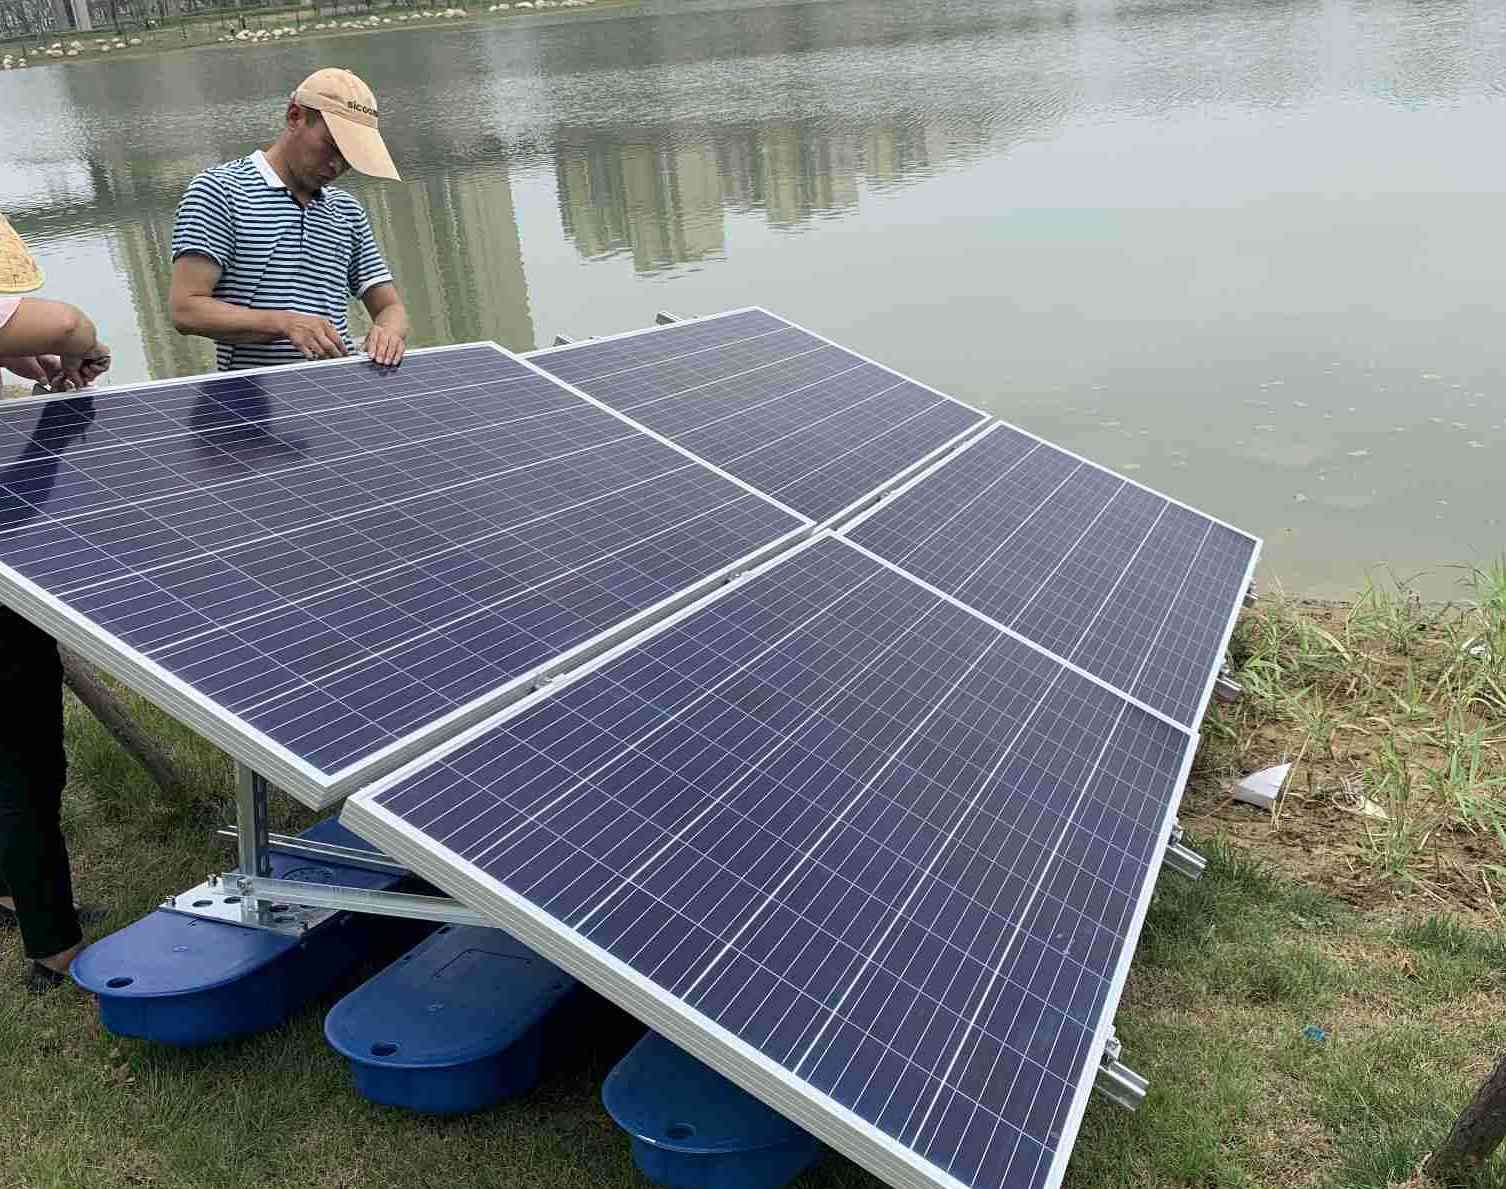  JNTECH Solarbelüftungssystem erfolgreich für Umwelt-Governance-Projekt in Shenling angewendetTan, Anqing Stadt